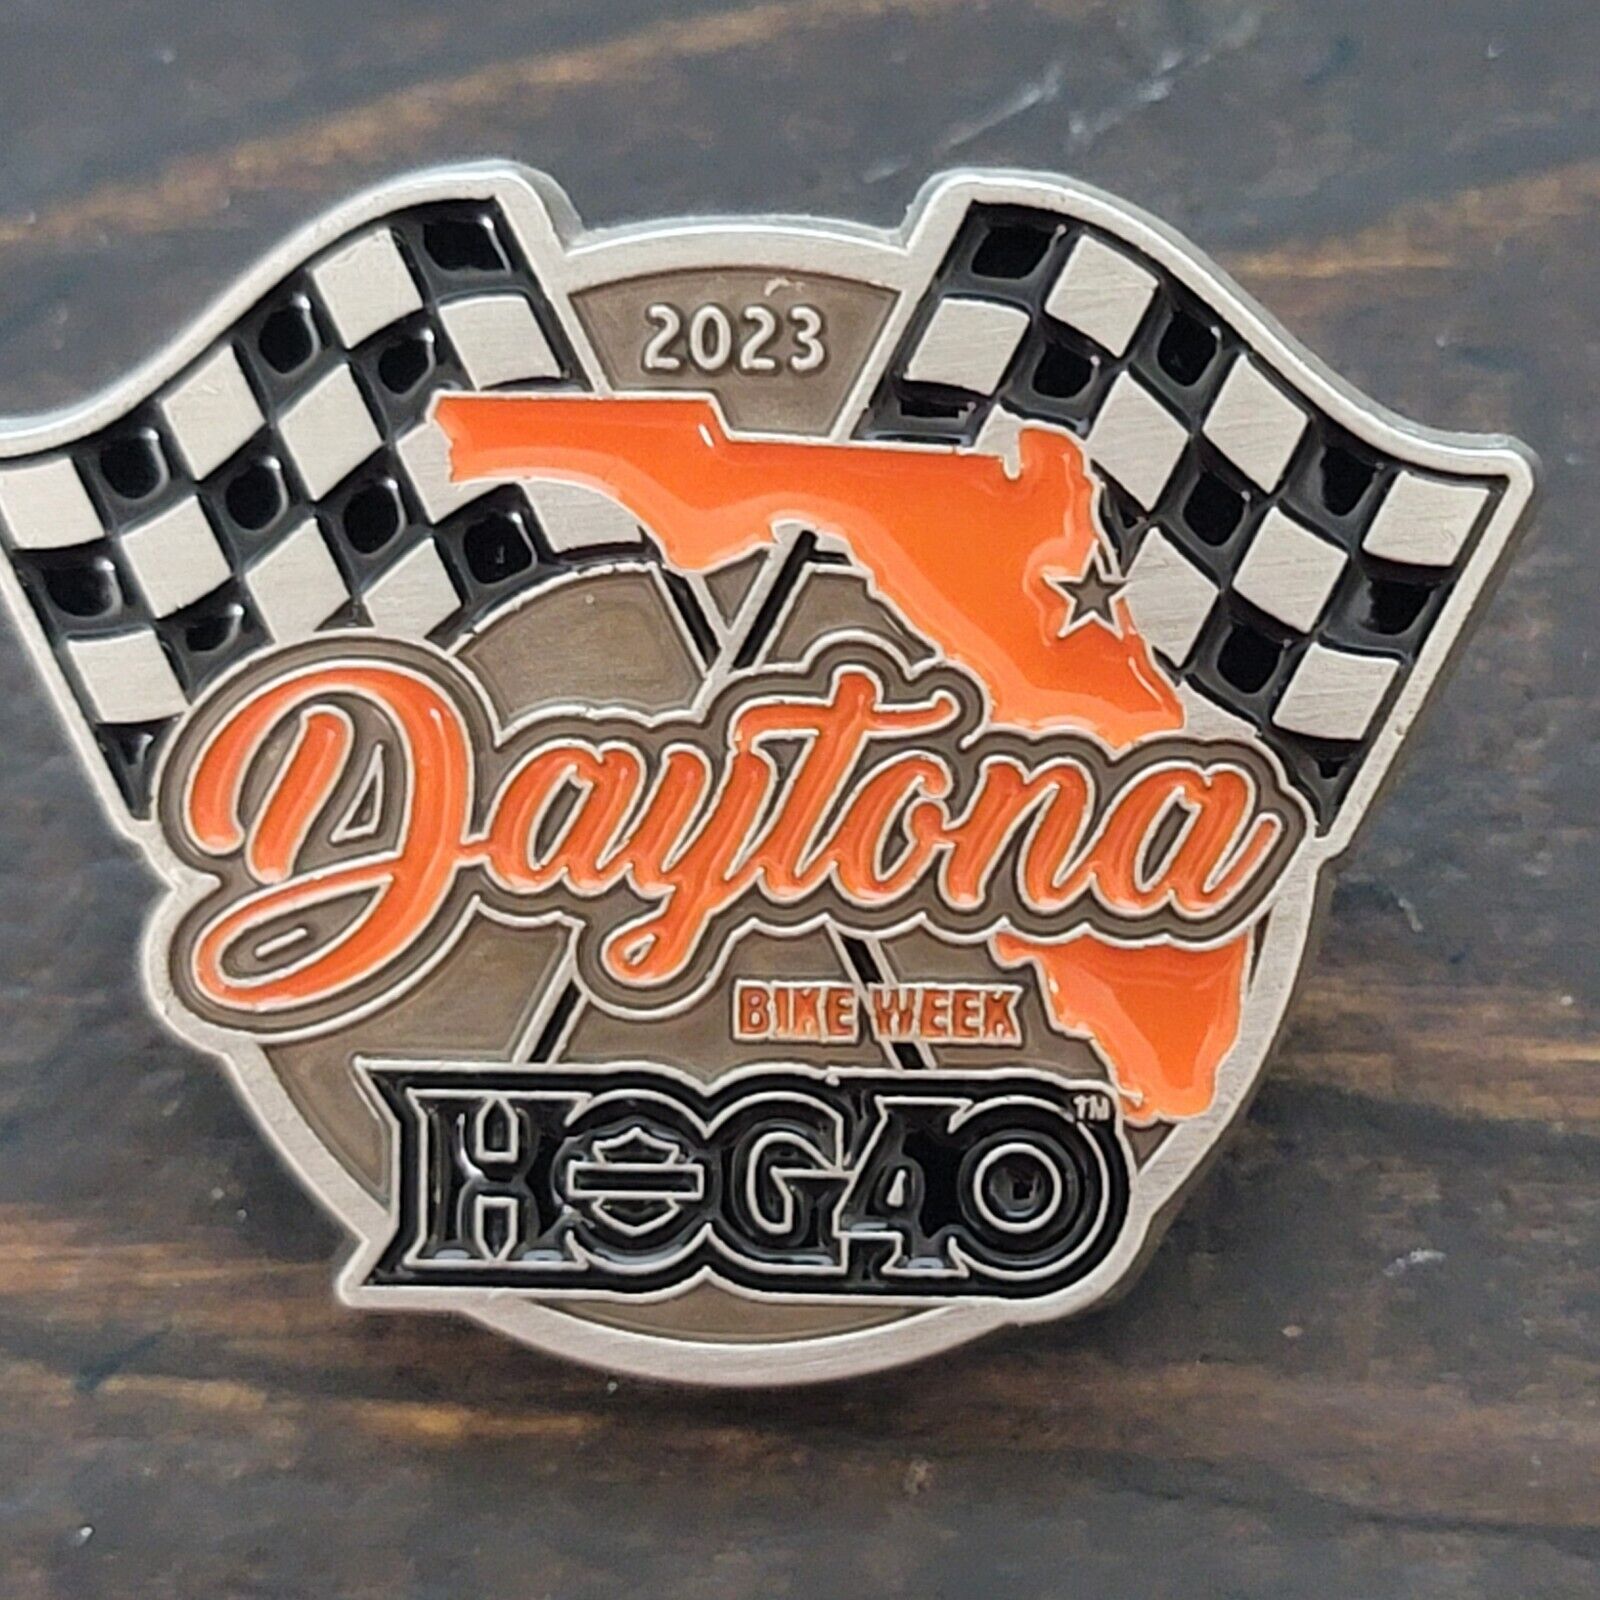 Harley-Davidson 2023 Daytona Bike Week Harley Owners HOG 40Y Check-in H.O.G. Pin